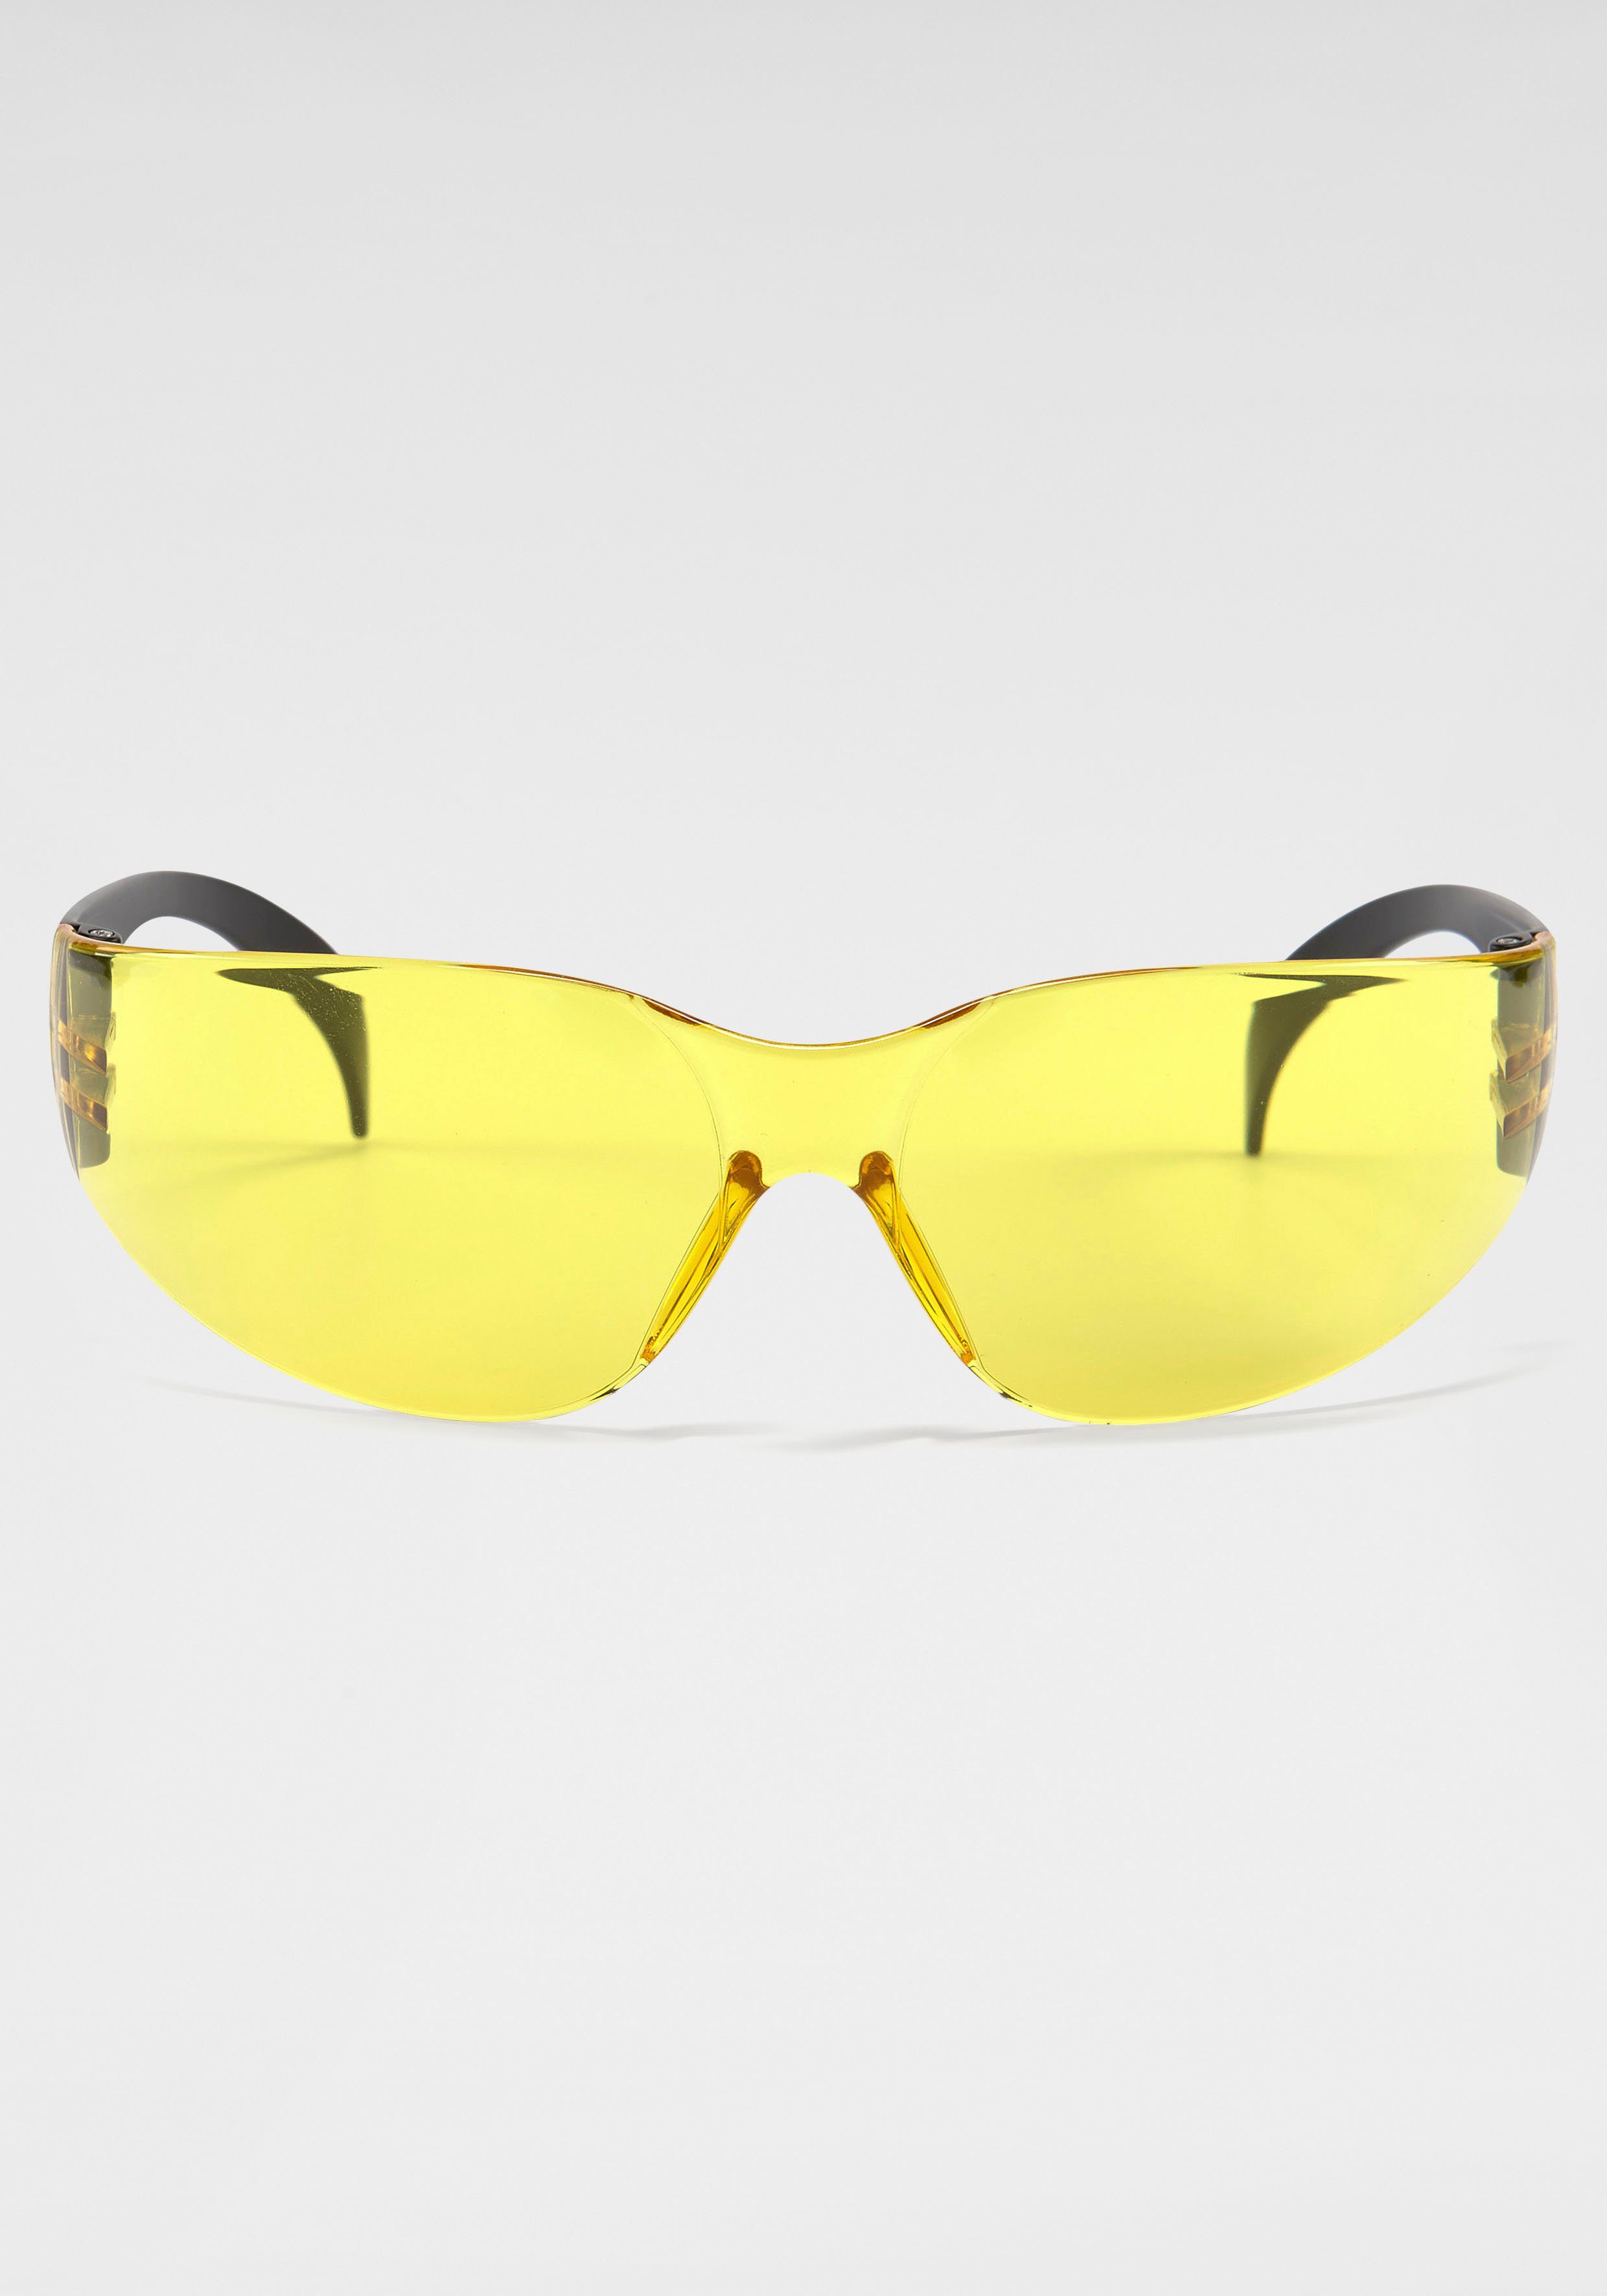 IN BACK Sonnenbrille Eyewear BLACK Randlos gelb